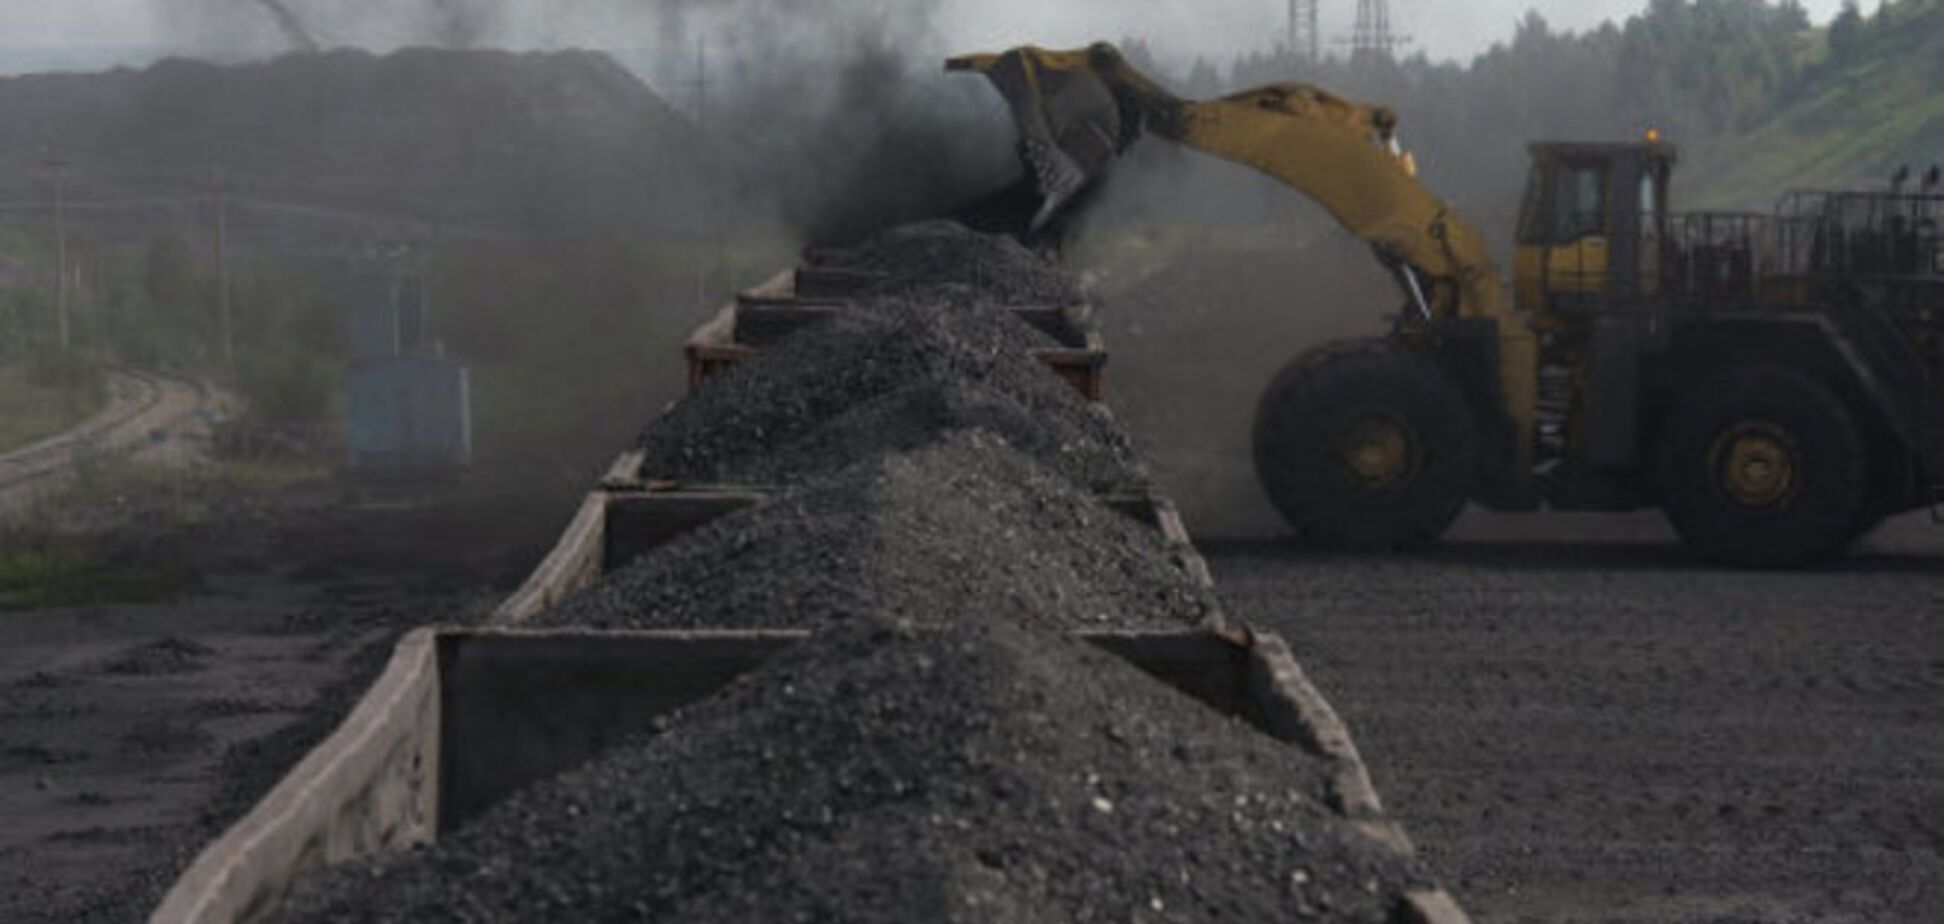 Убытки от закупок угля из ЮАР составили почти миллиард гривен - ГПУ